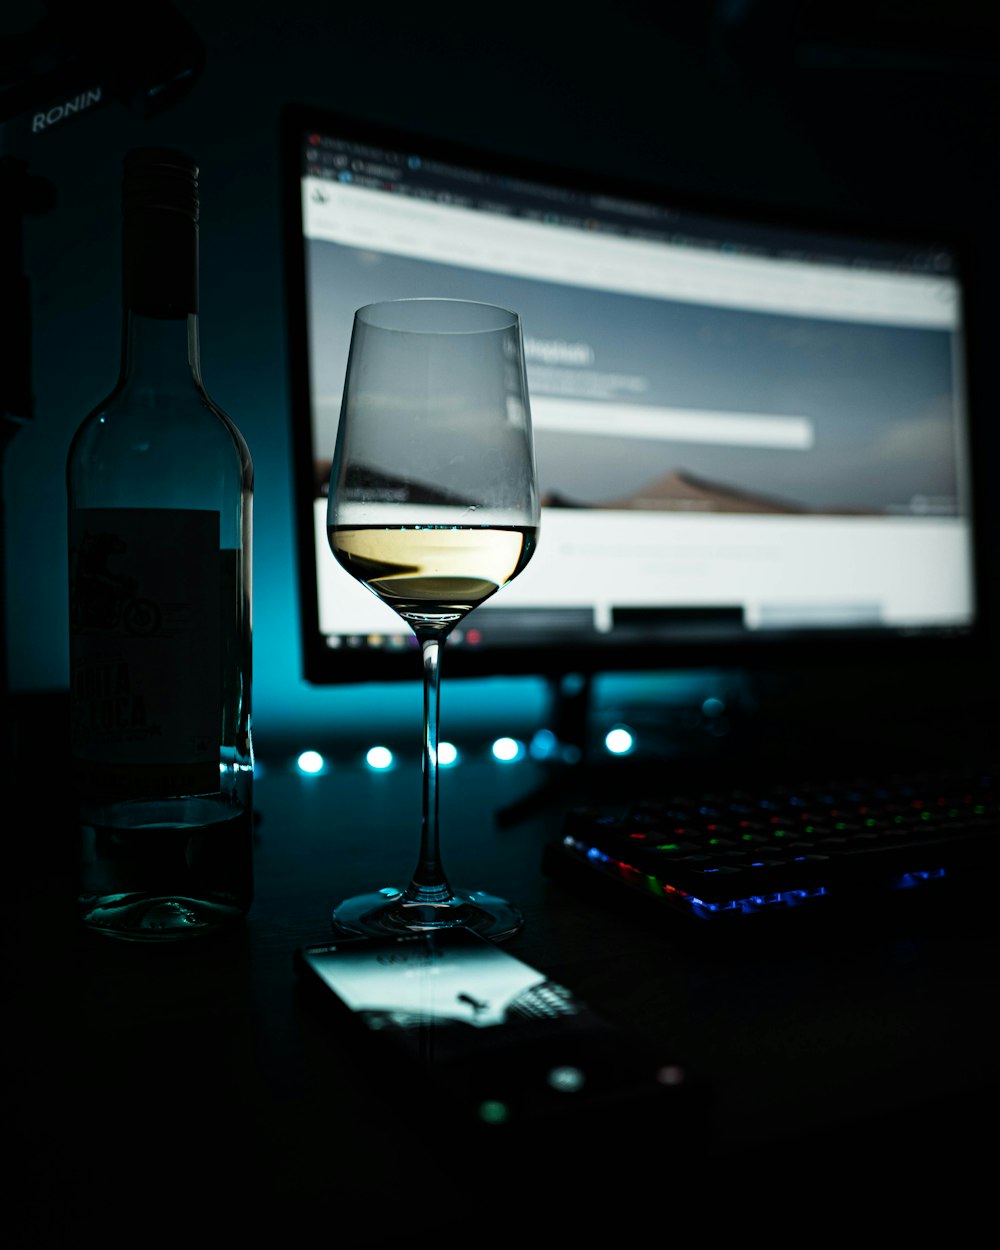 clear wine glass beside black computer keyboard